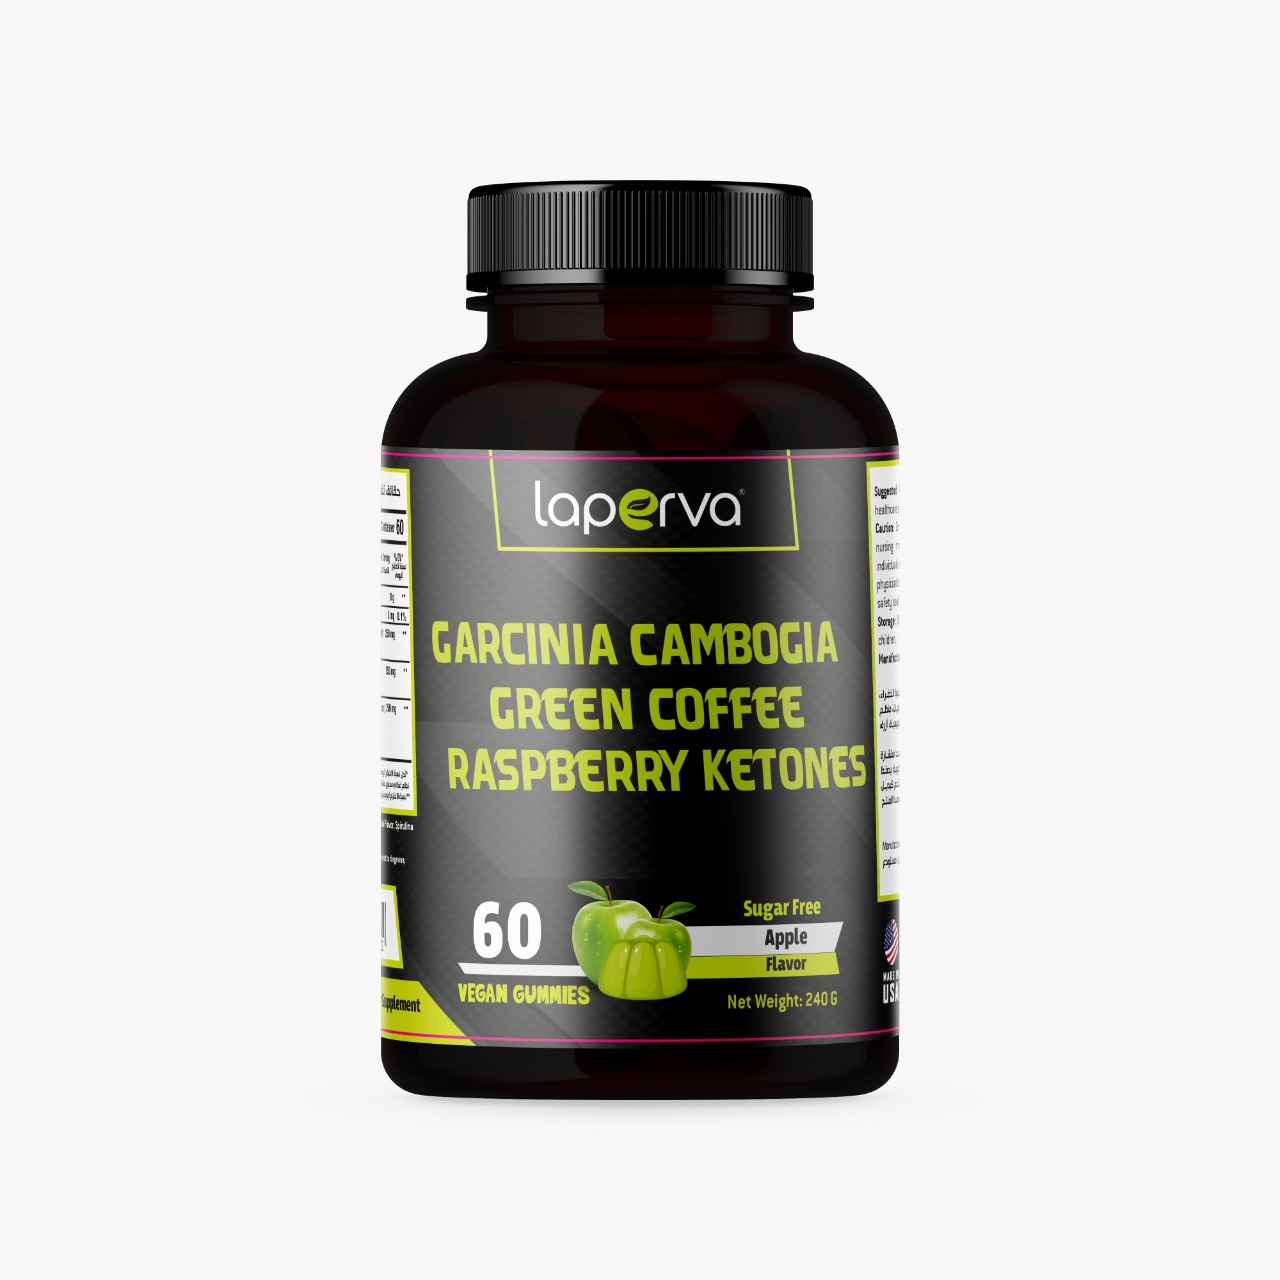 Laperva Garcinia Cambogia Green Coffee Raspberry Ketones, Apple, 60 Veggie Gummies